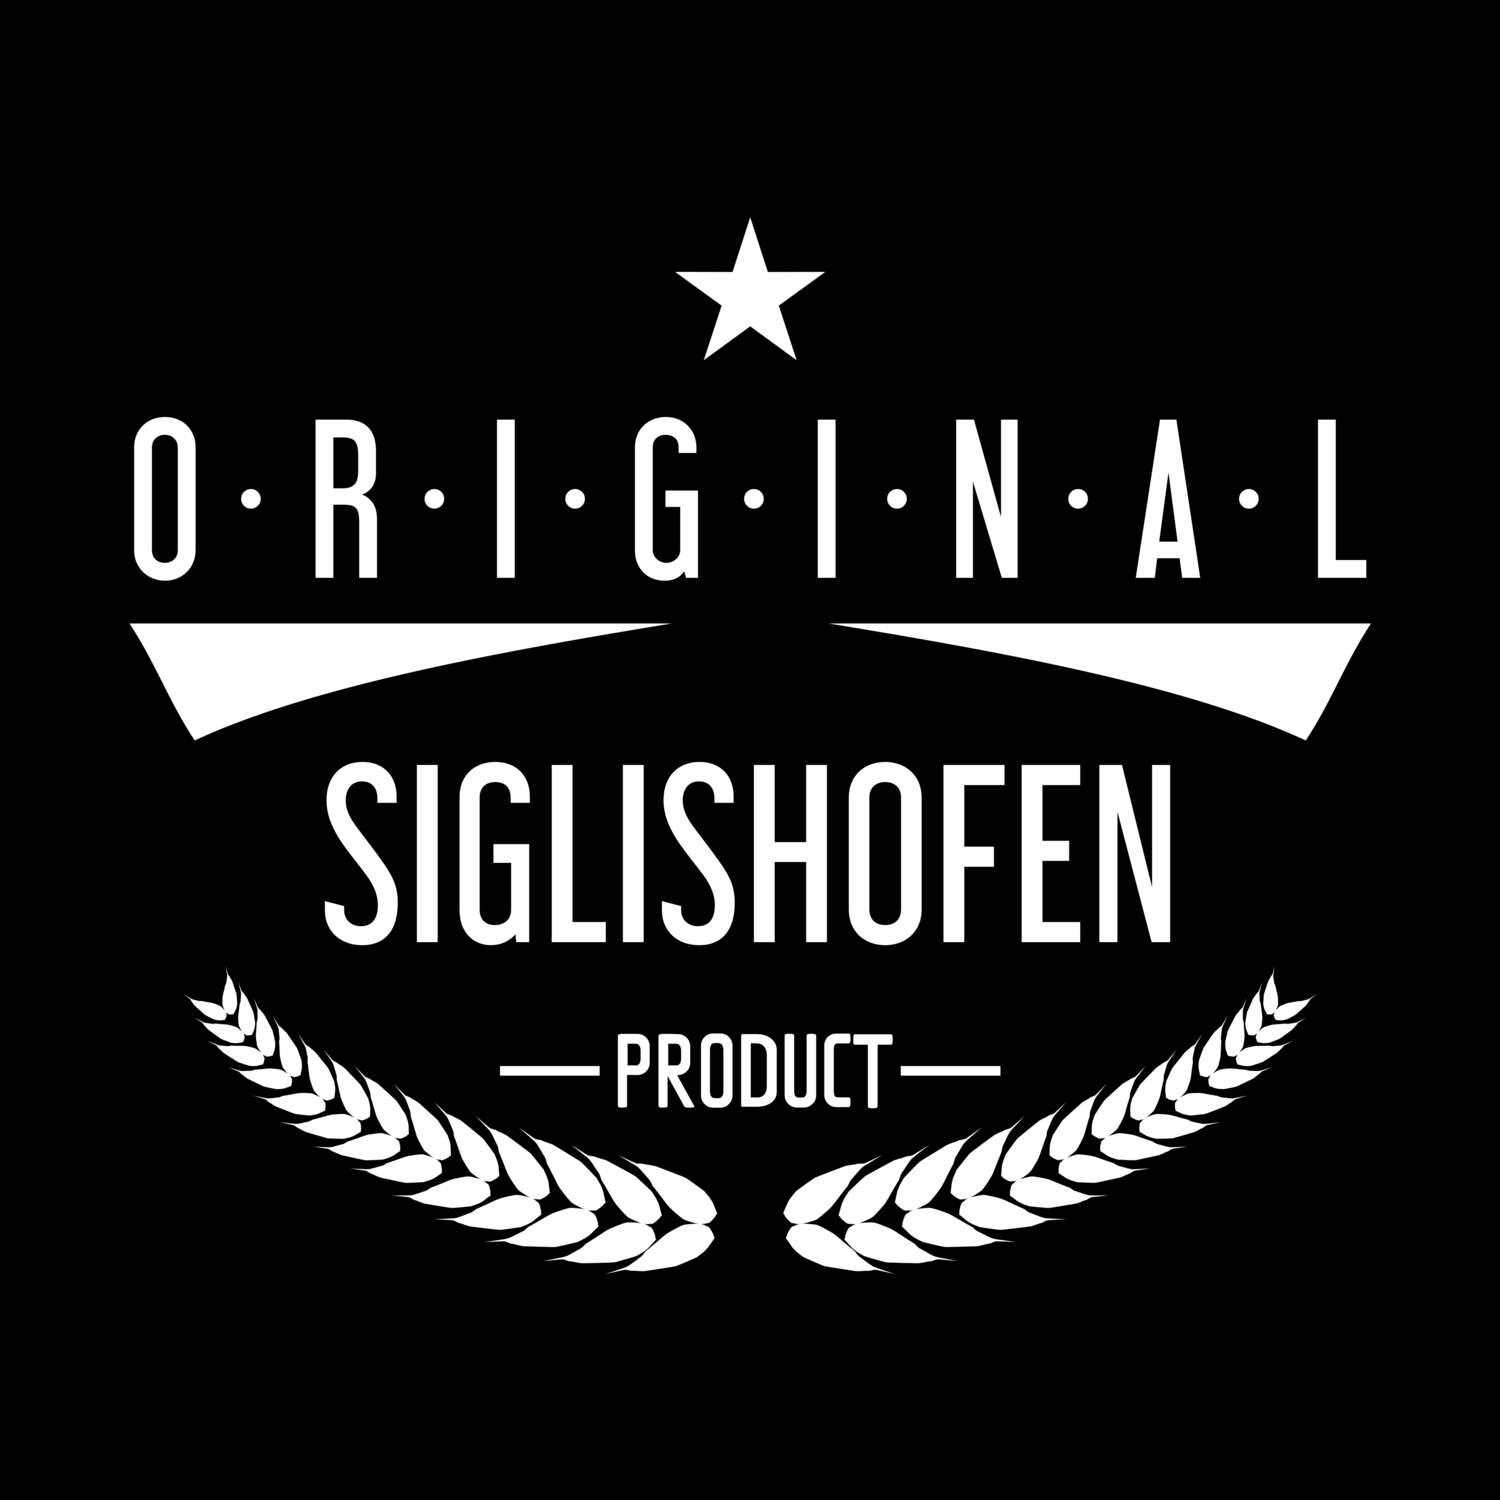 Siglishofen T-Shirt »Original Product«